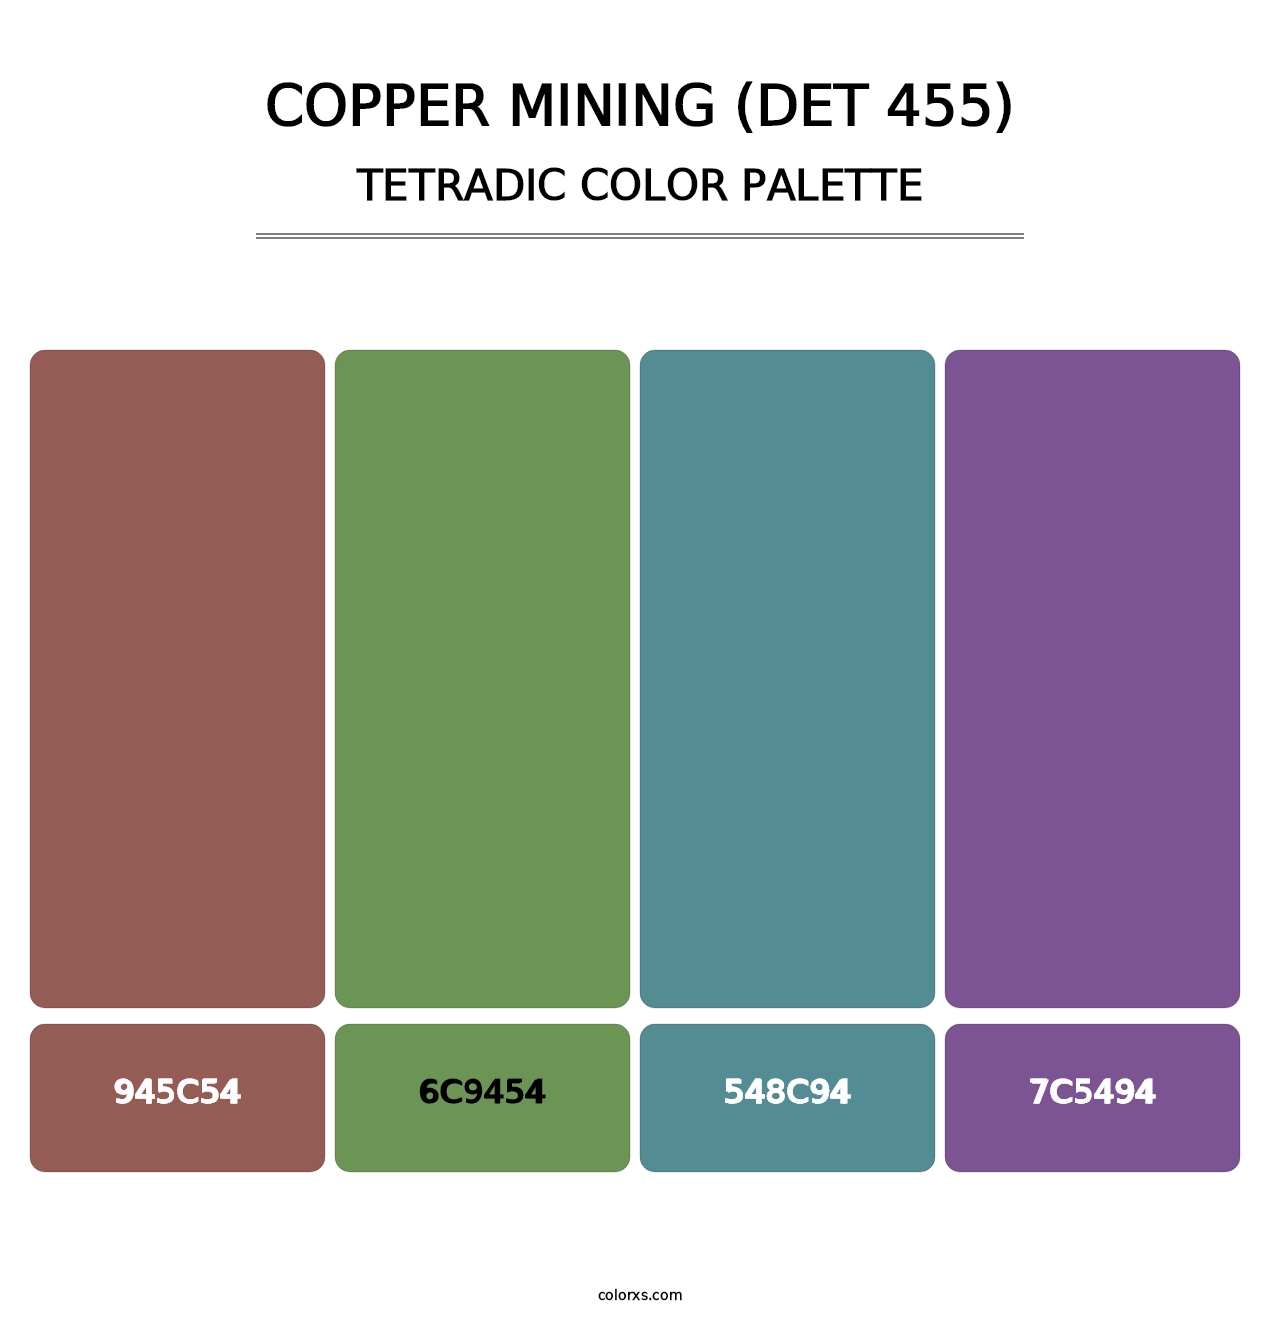 Copper Mining (DET 455) - Tetradic Color Palette